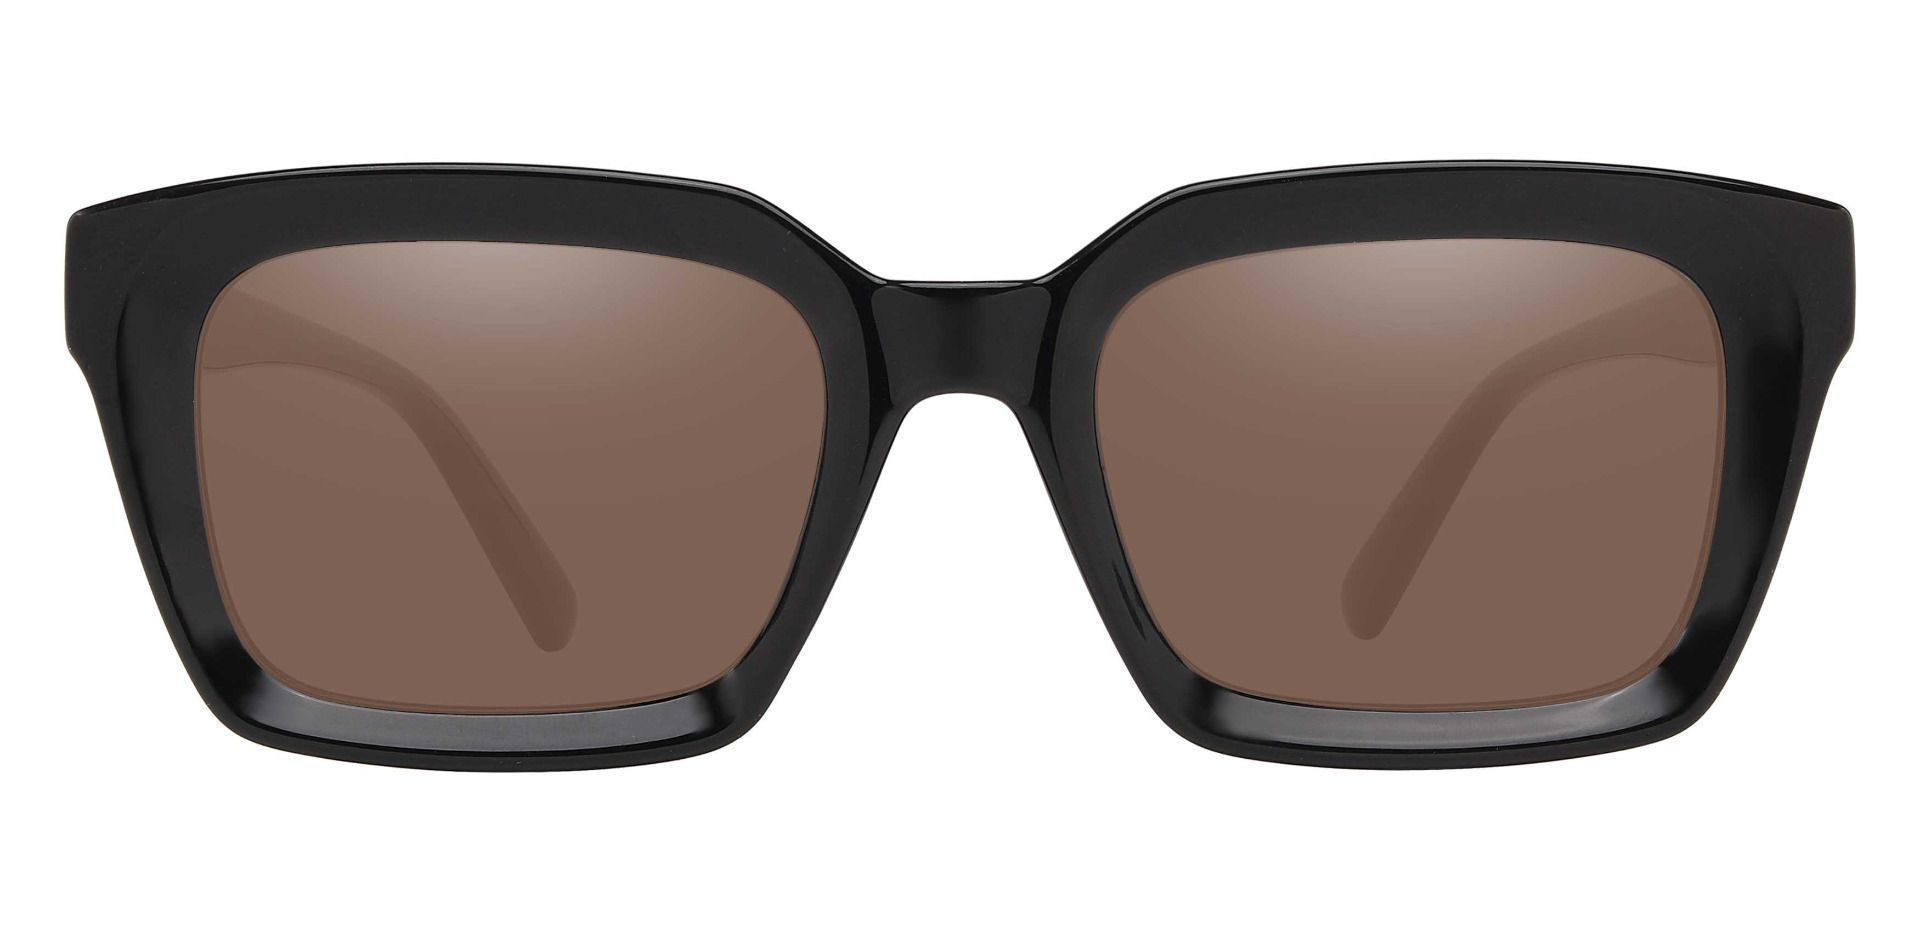 Unity Rectangle Prescription Sunglasses - Black Frame With Brown Lenses